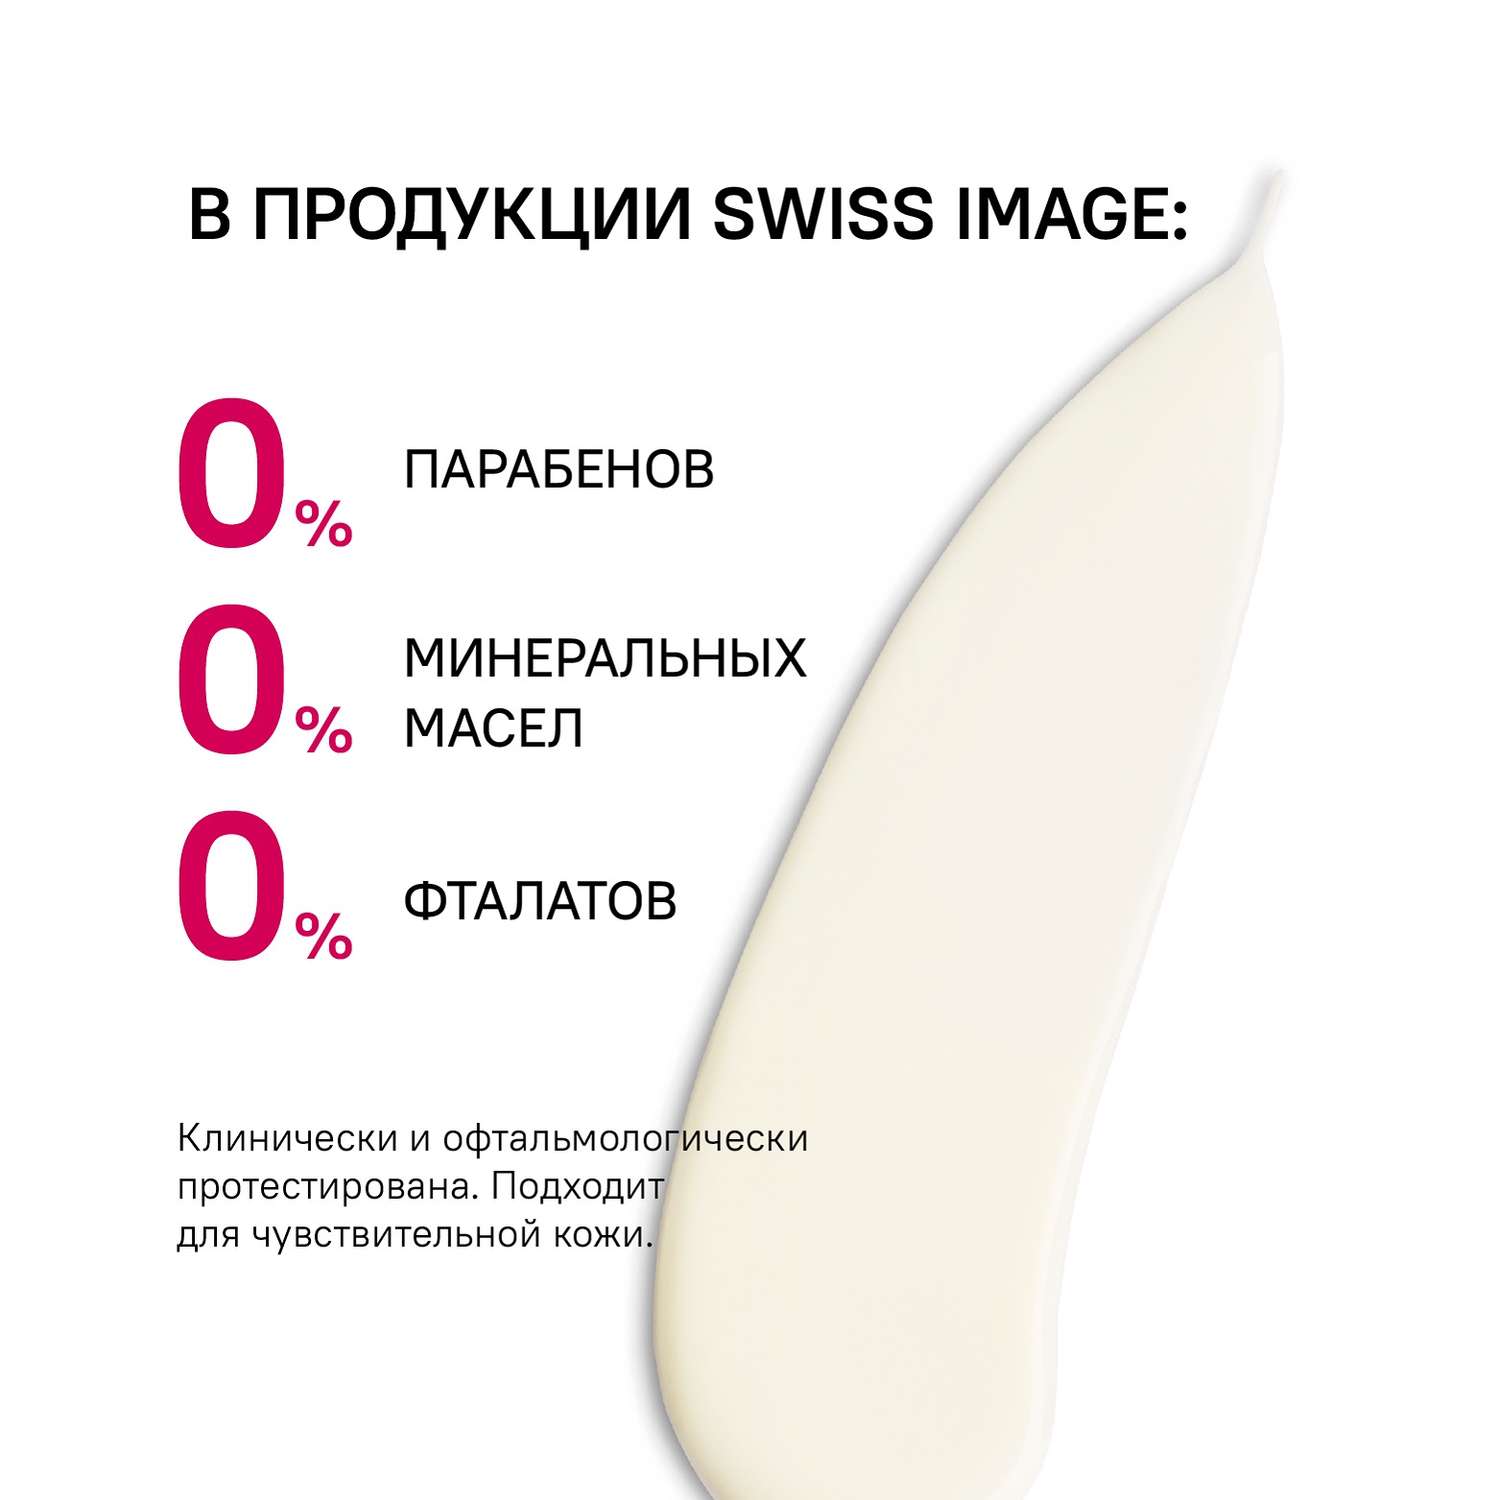 Крем вокруг глаз Swiss image против глубоких морщин 46+ антивозрастной уход 15 мл - фото 9